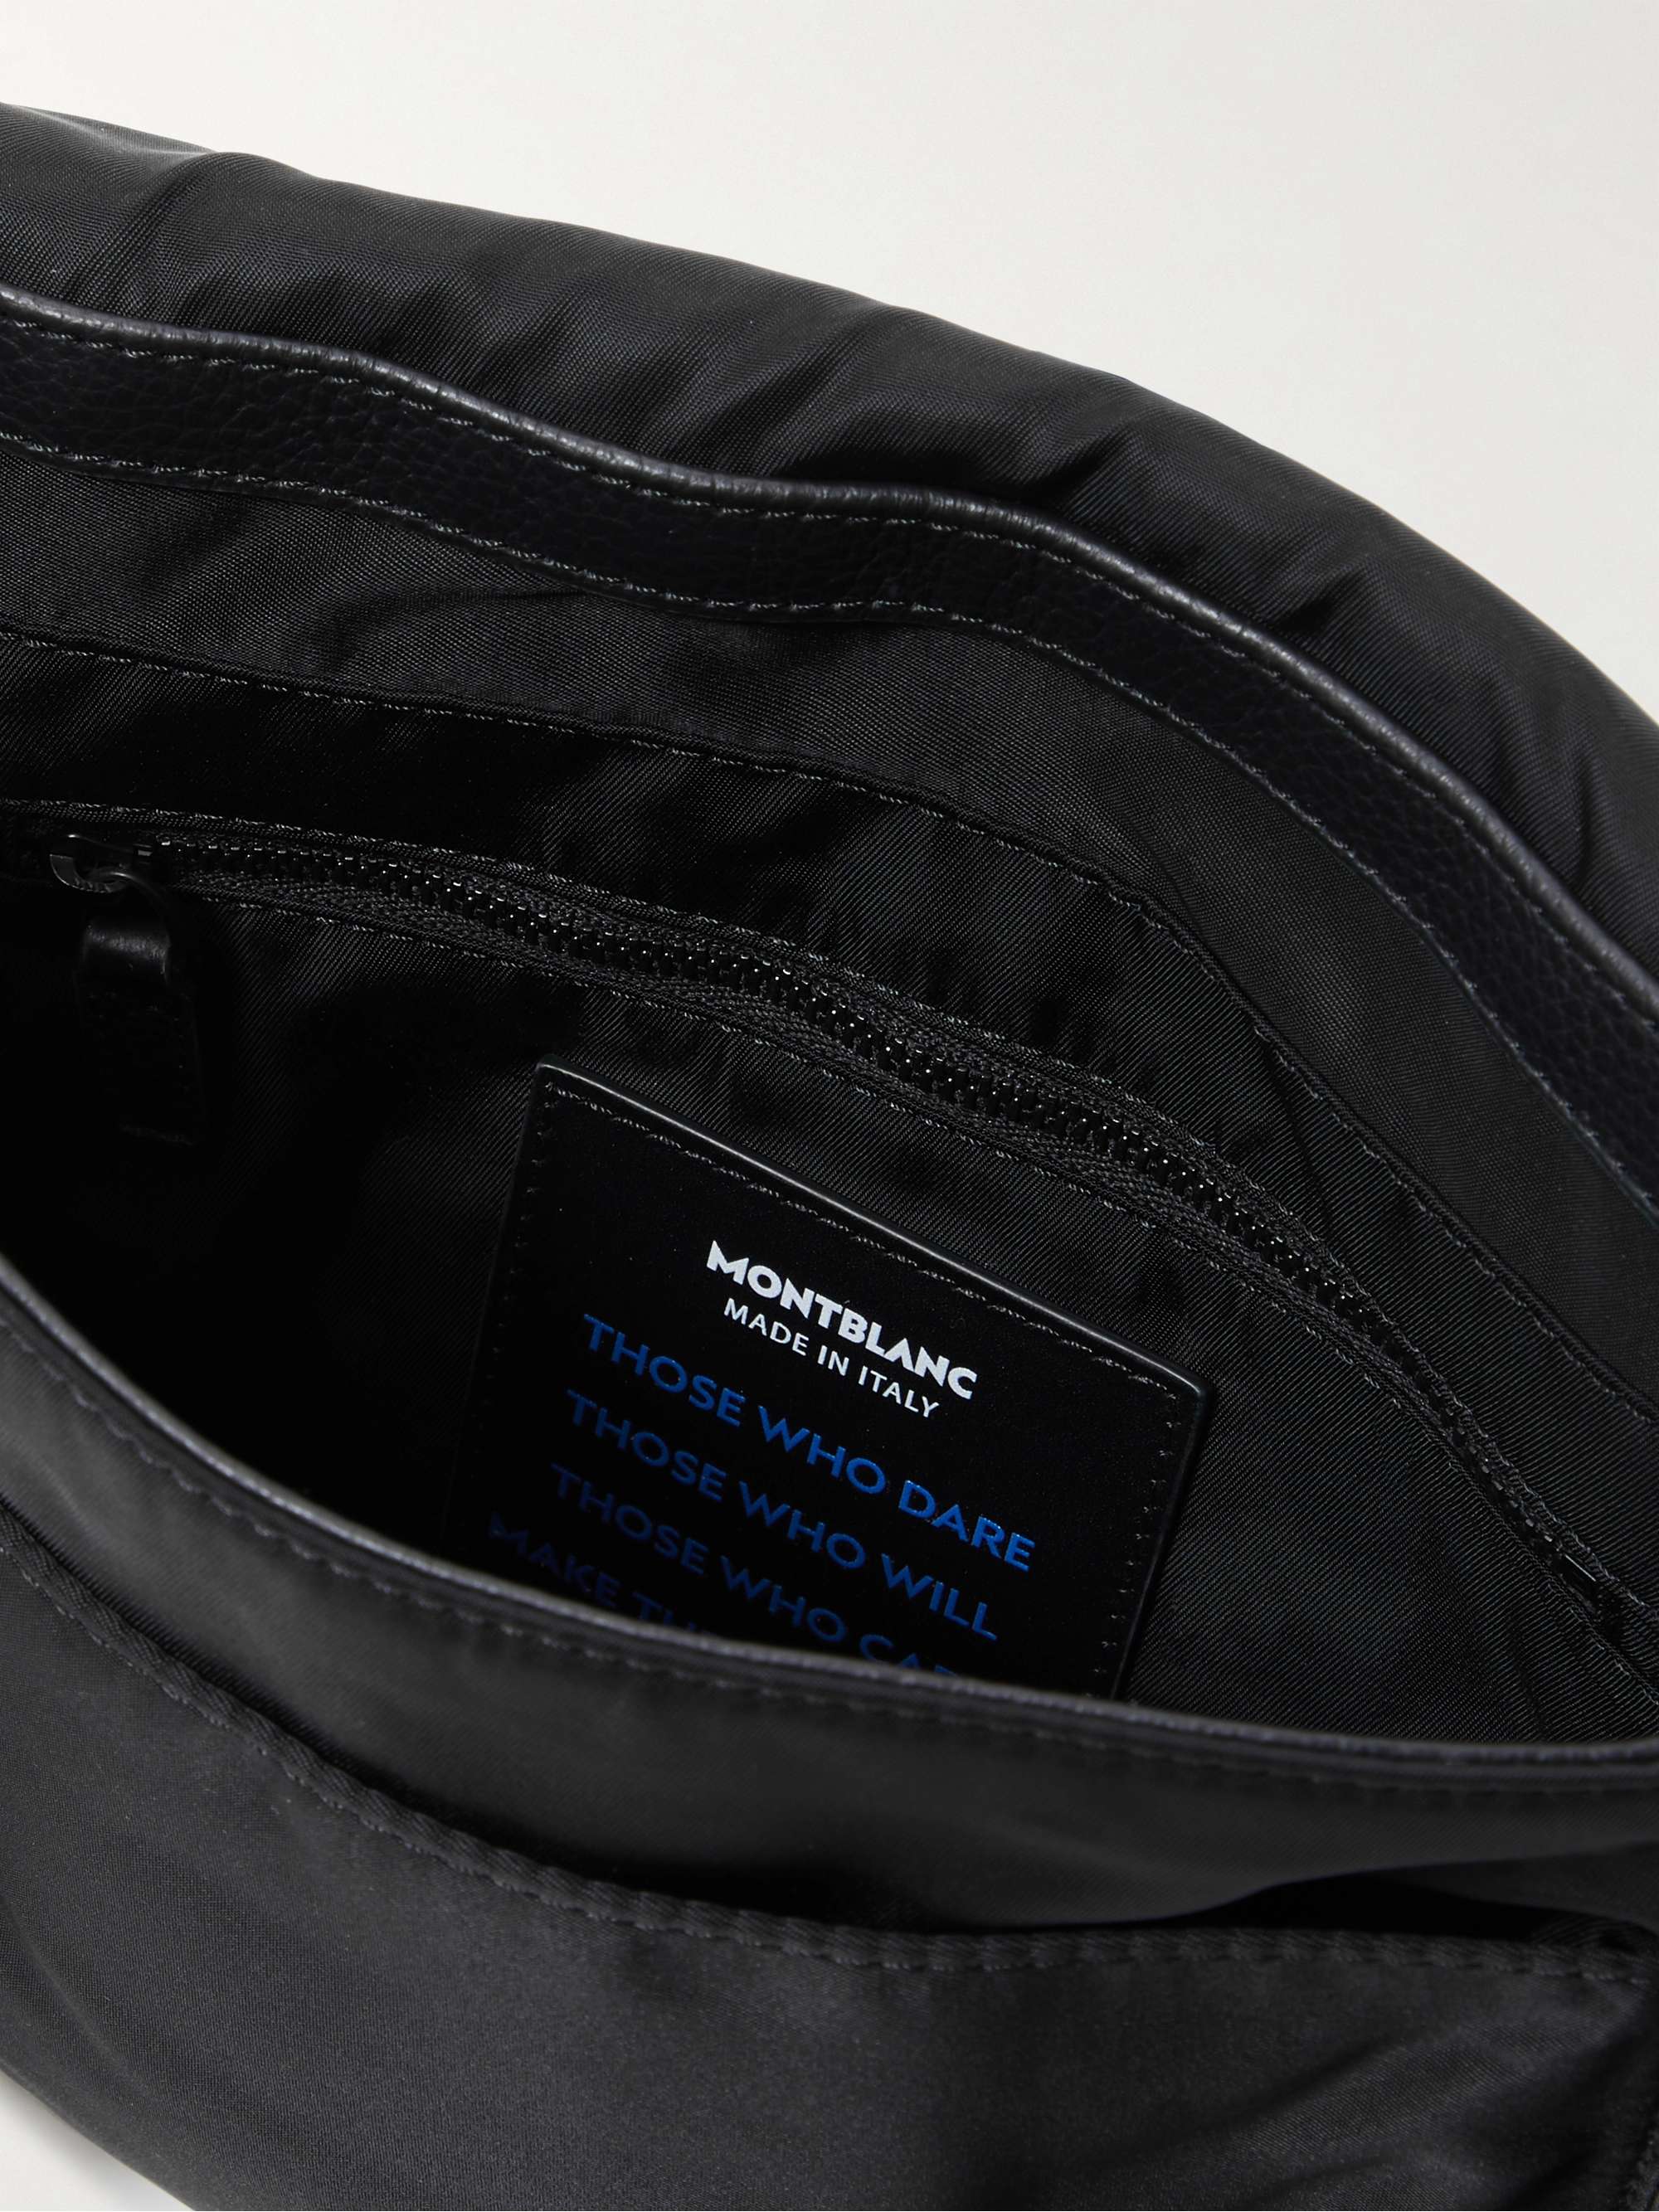 MONTBLANC + Public School Blue Spirit Leather-Trimmed ECONYL Messenger Bag